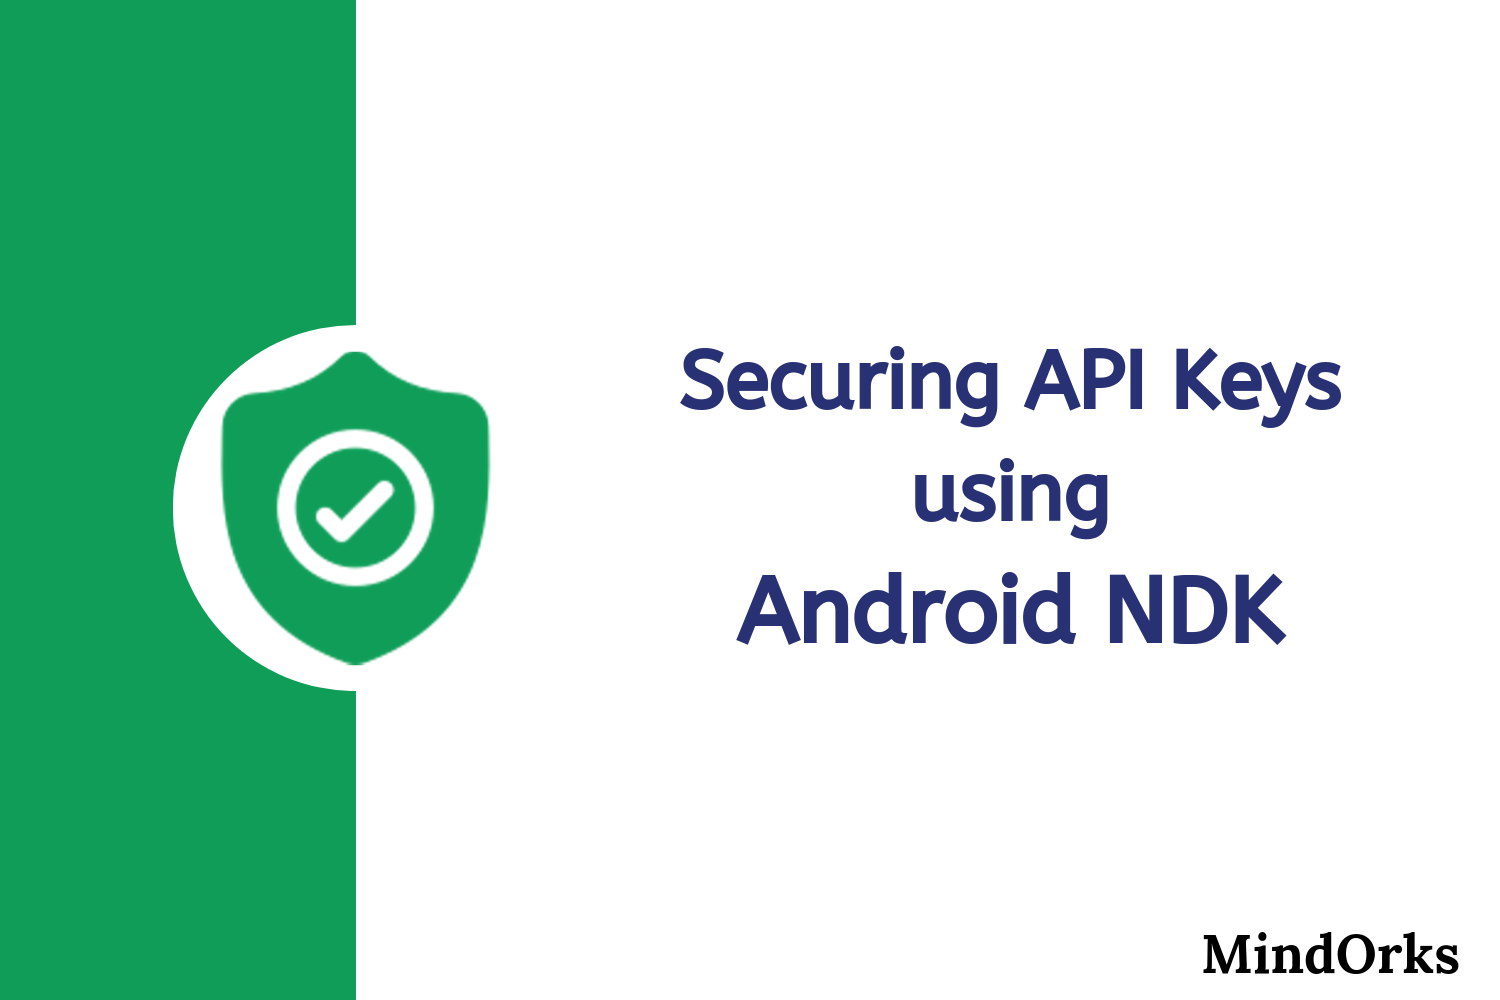 Securing API Keys using Android NDK (Native Development Kit)